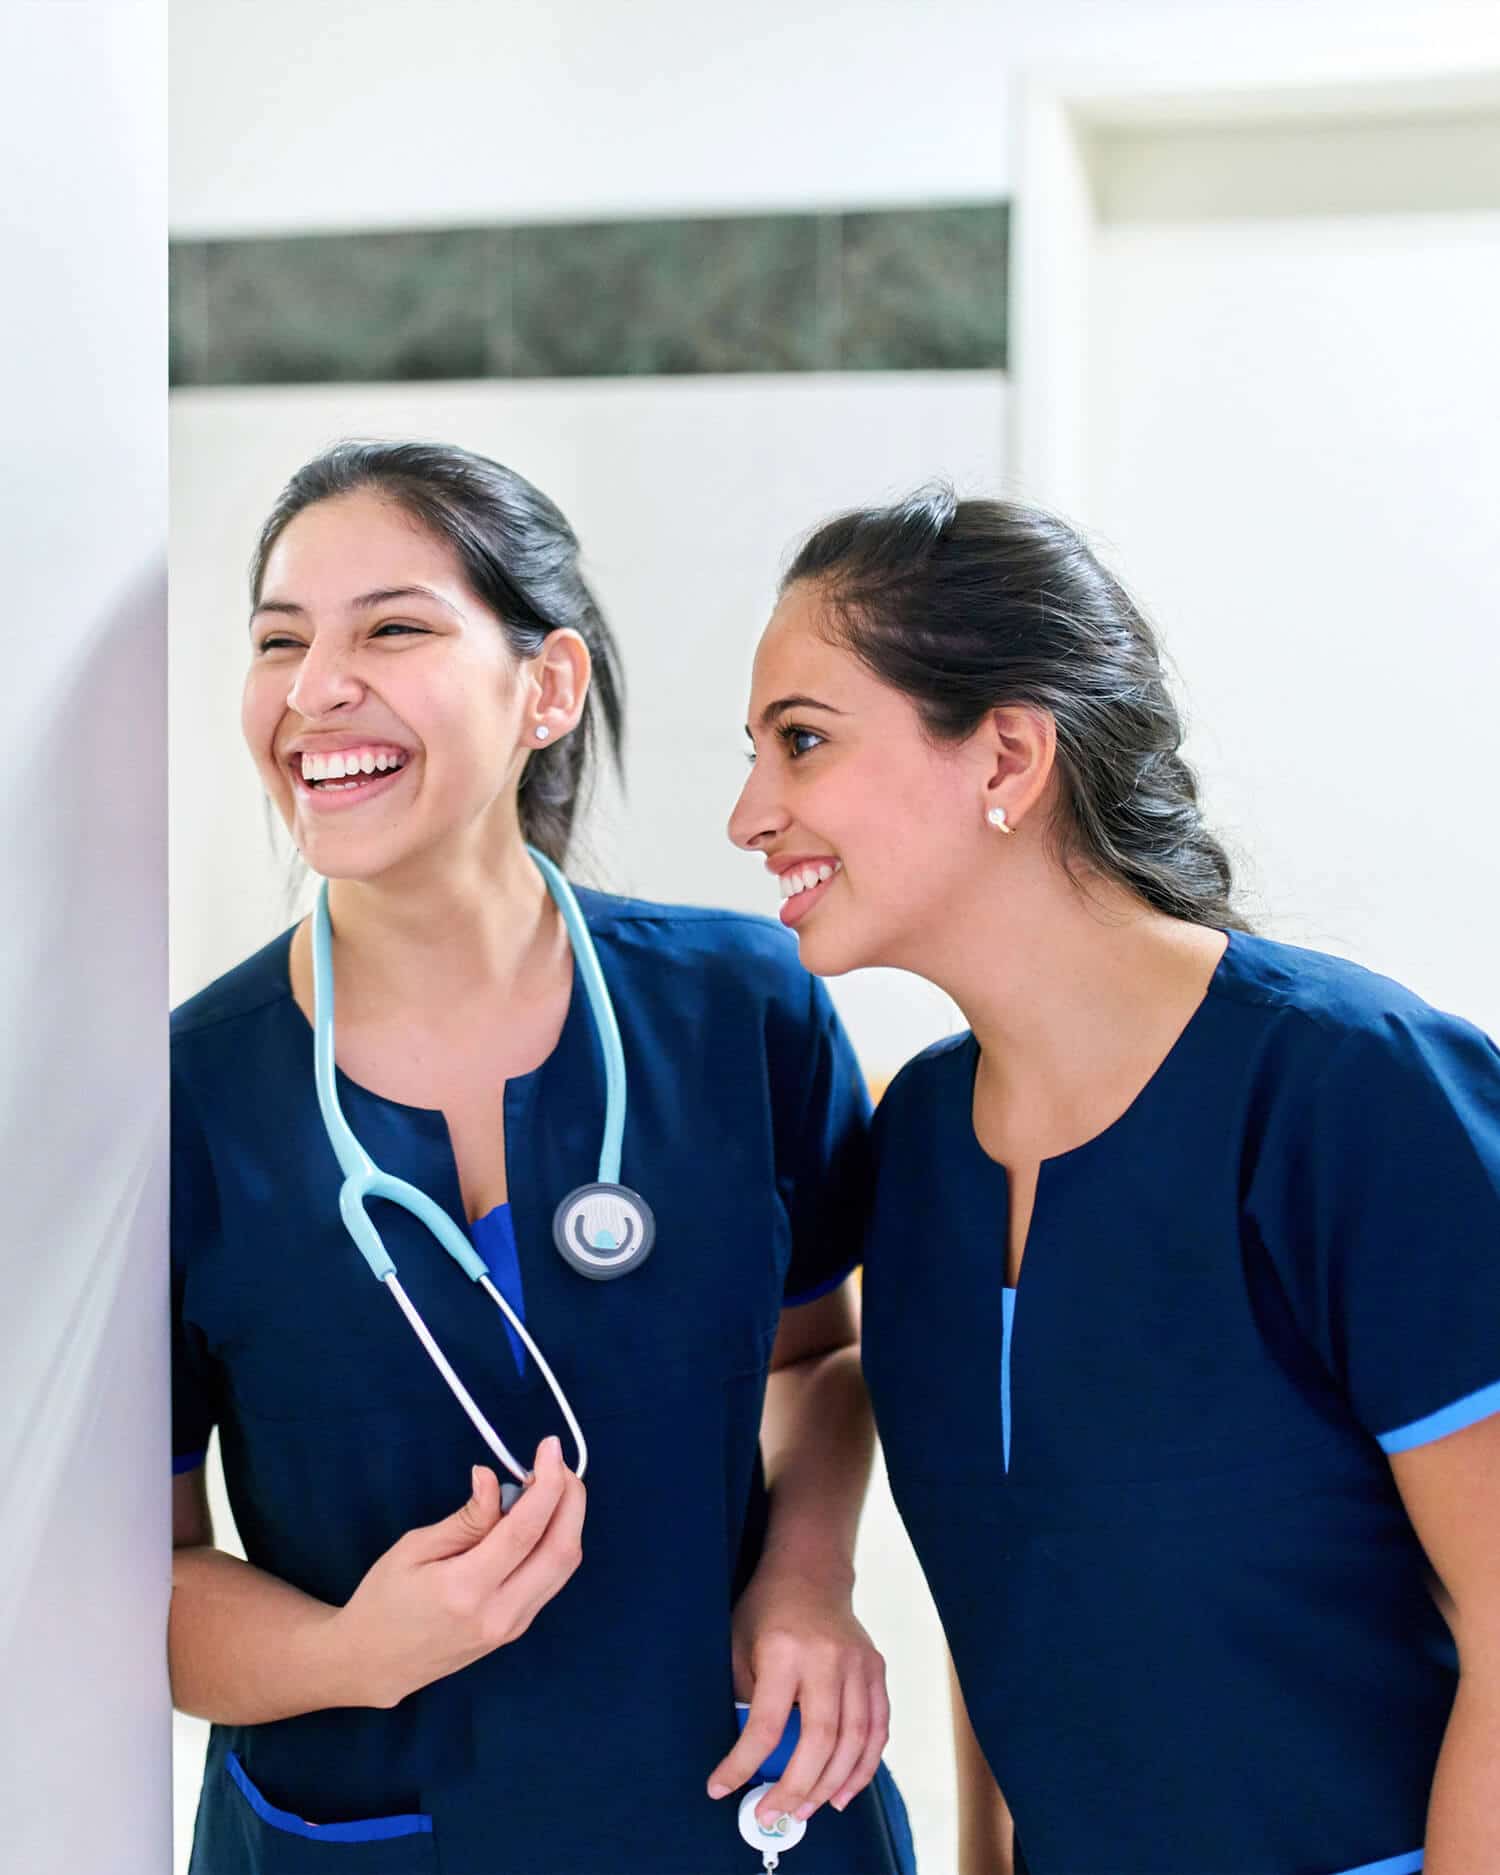 Two nurses in scrubs smiling